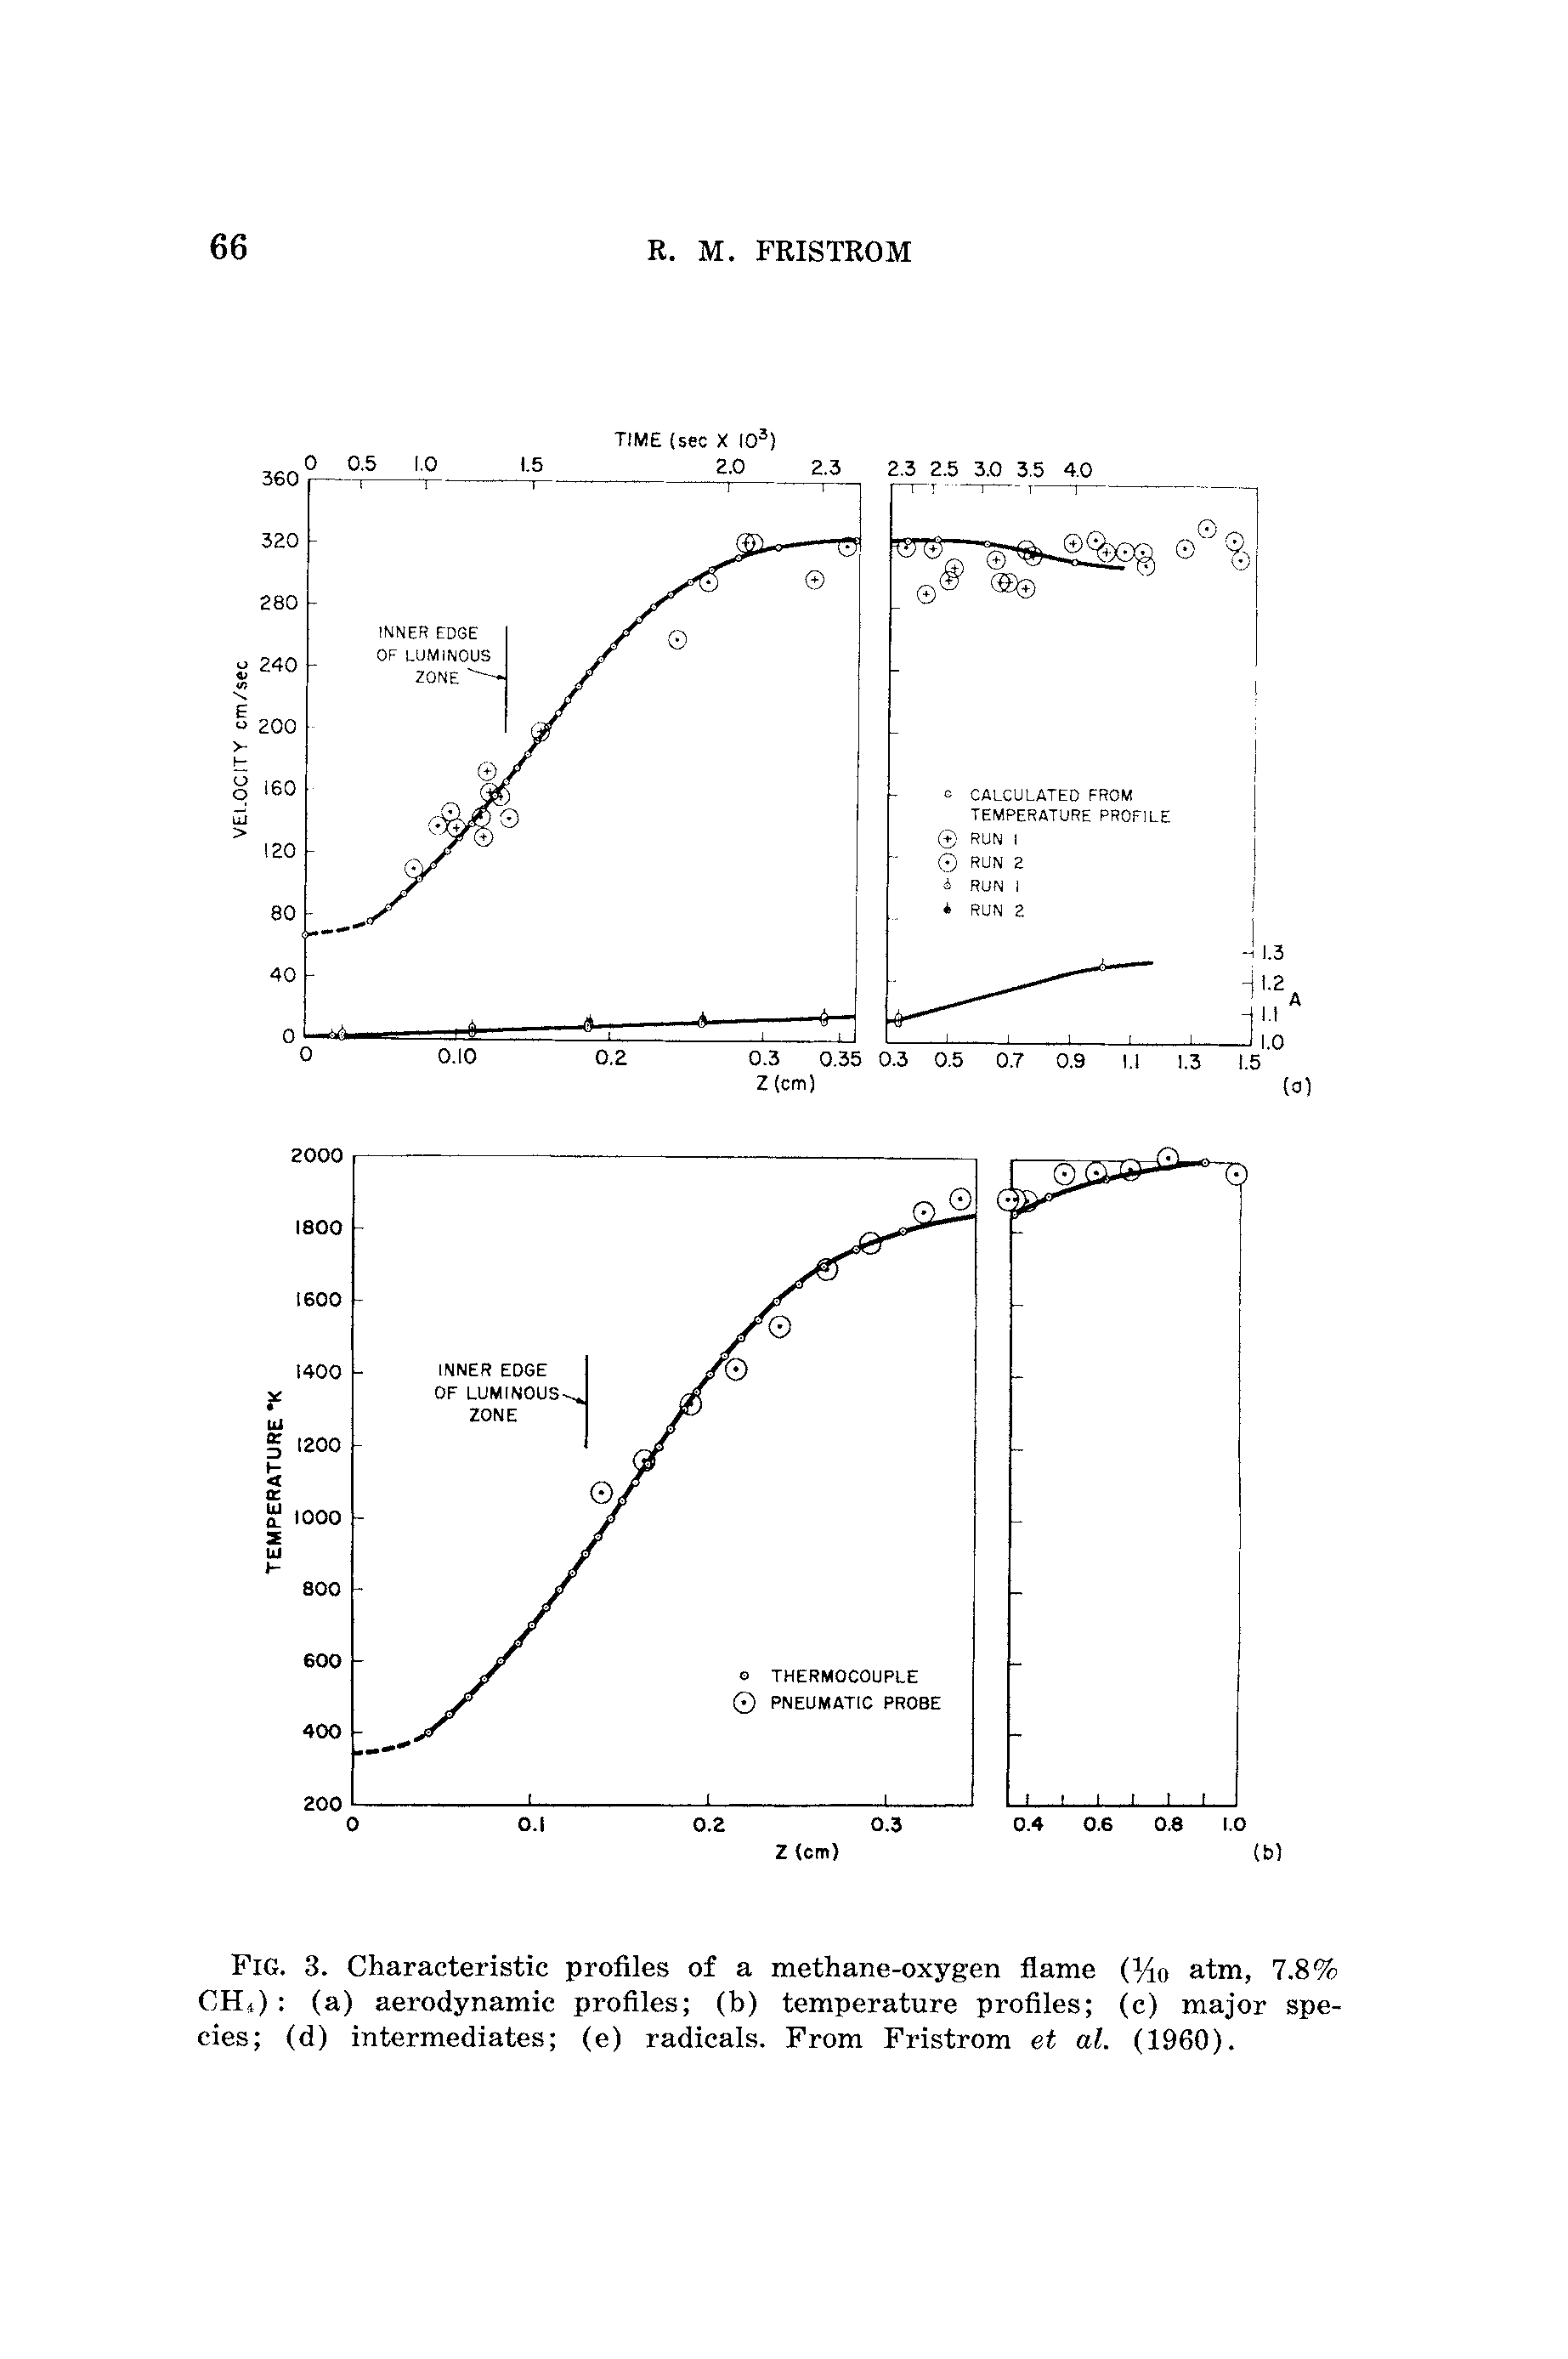 Fig. 3. Characteristic profiles of a methane-oxygen flame (Mo atm, 7.8% CHj) (a) aerodynamic profiles (b) temperature profiles (c) major species (d) intermediates (e) radicals. From Fristrom et al. (1960).